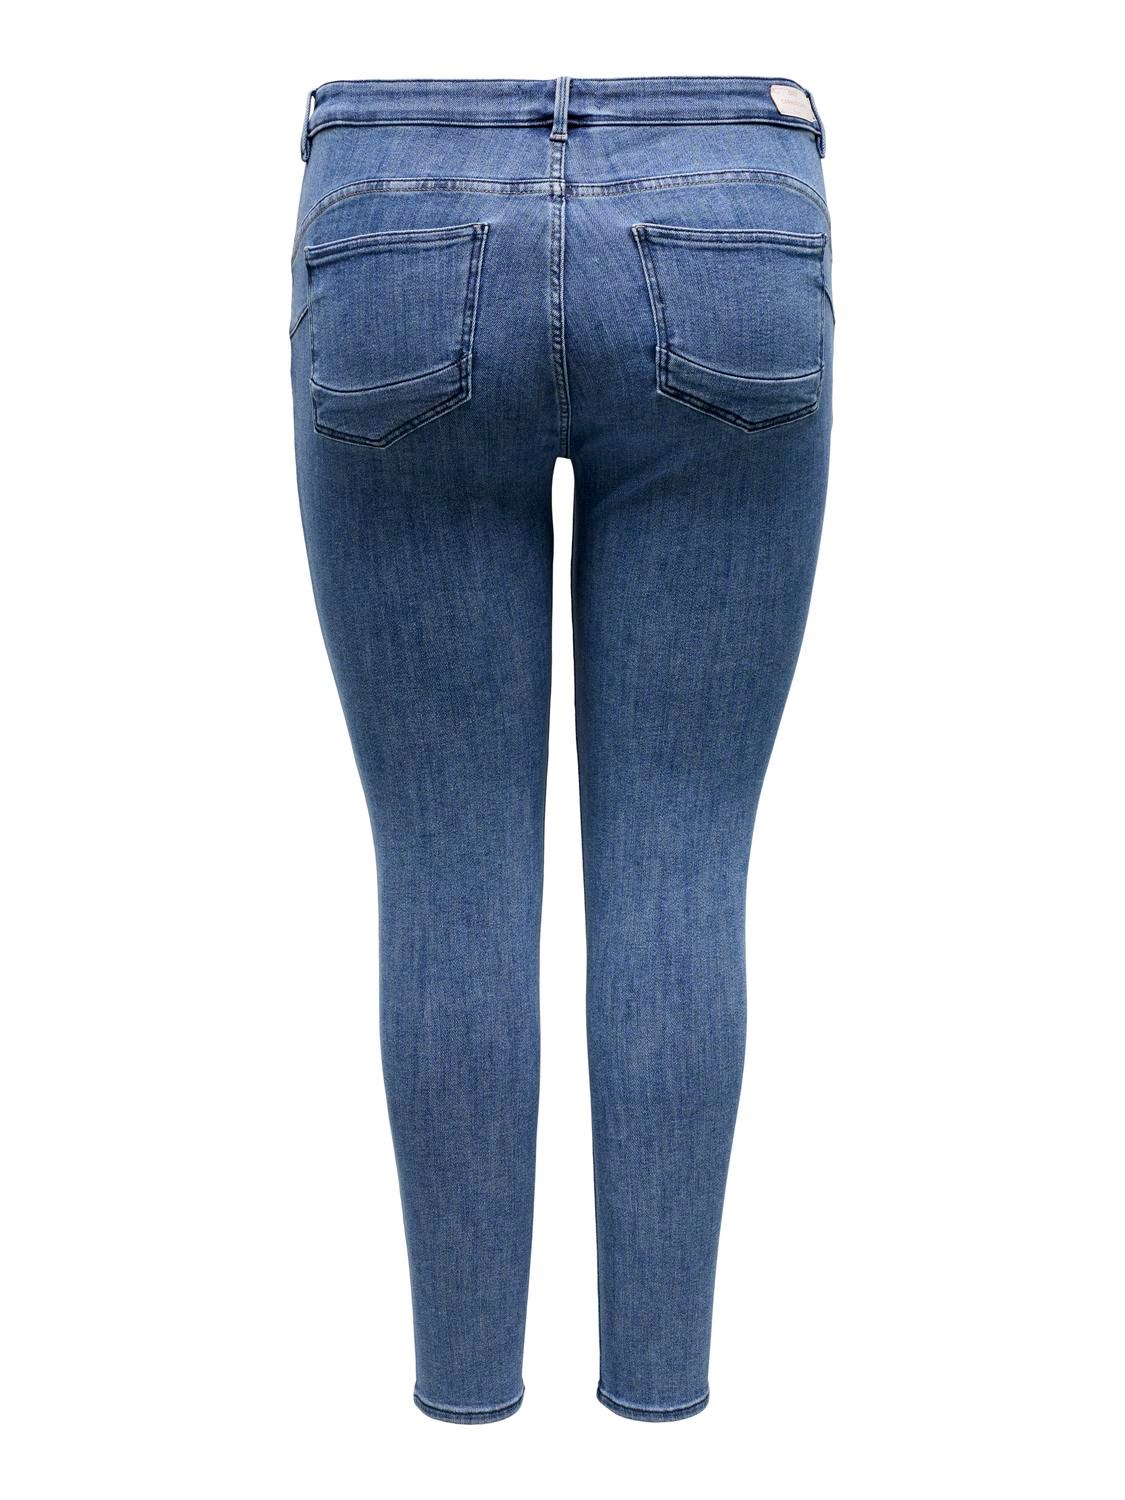 ONLY Jeans Skinny Fit Vita media -Dark Medium Blue Denim - 15300955